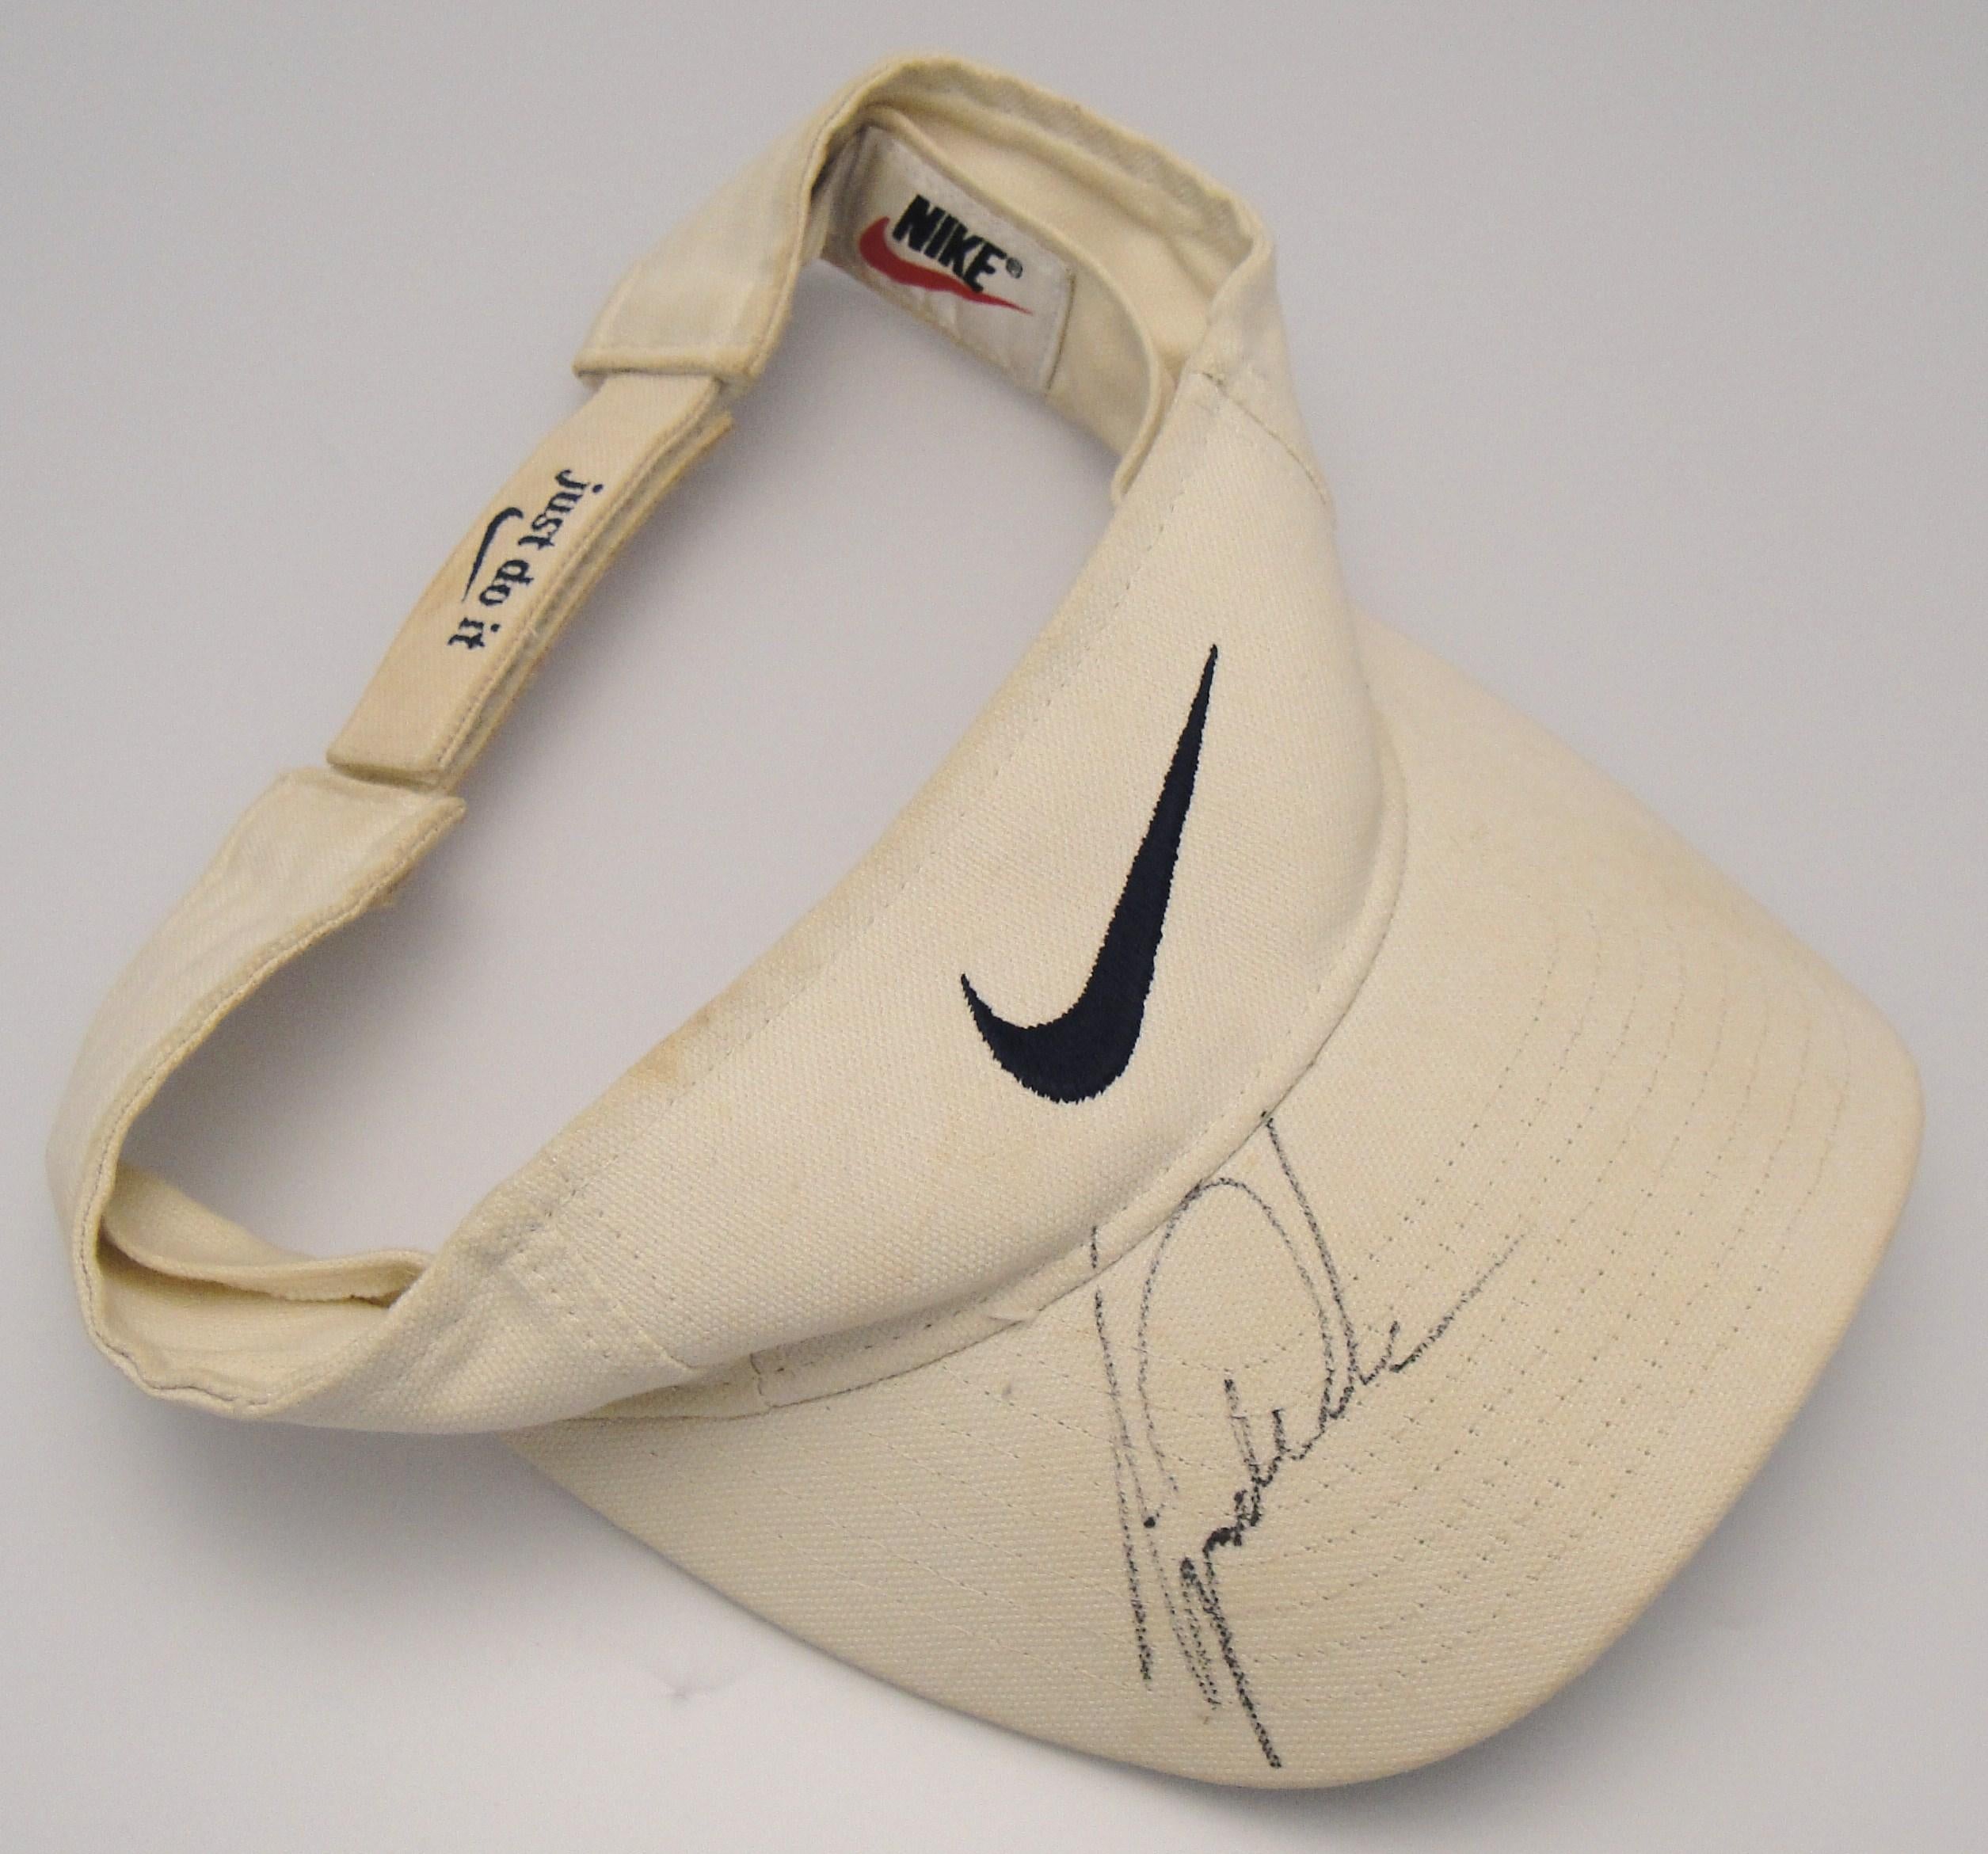 Contemporary Tiger Woods genuine autograph on golf sun visor